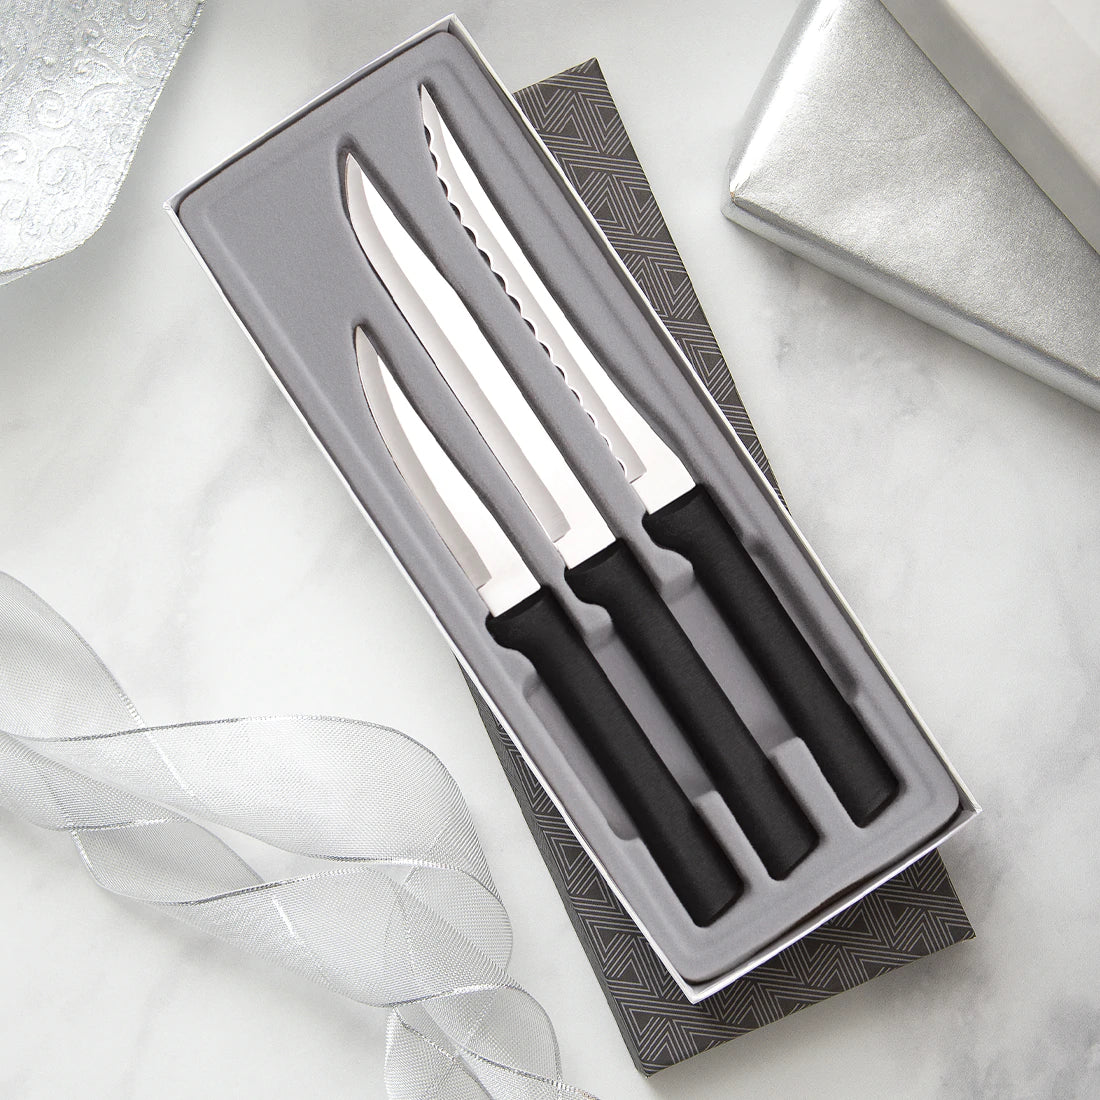 Rada Cutlery Cooking Essentials Knife Starter Gift Set 3 Piece Stainless Steel Set, Black